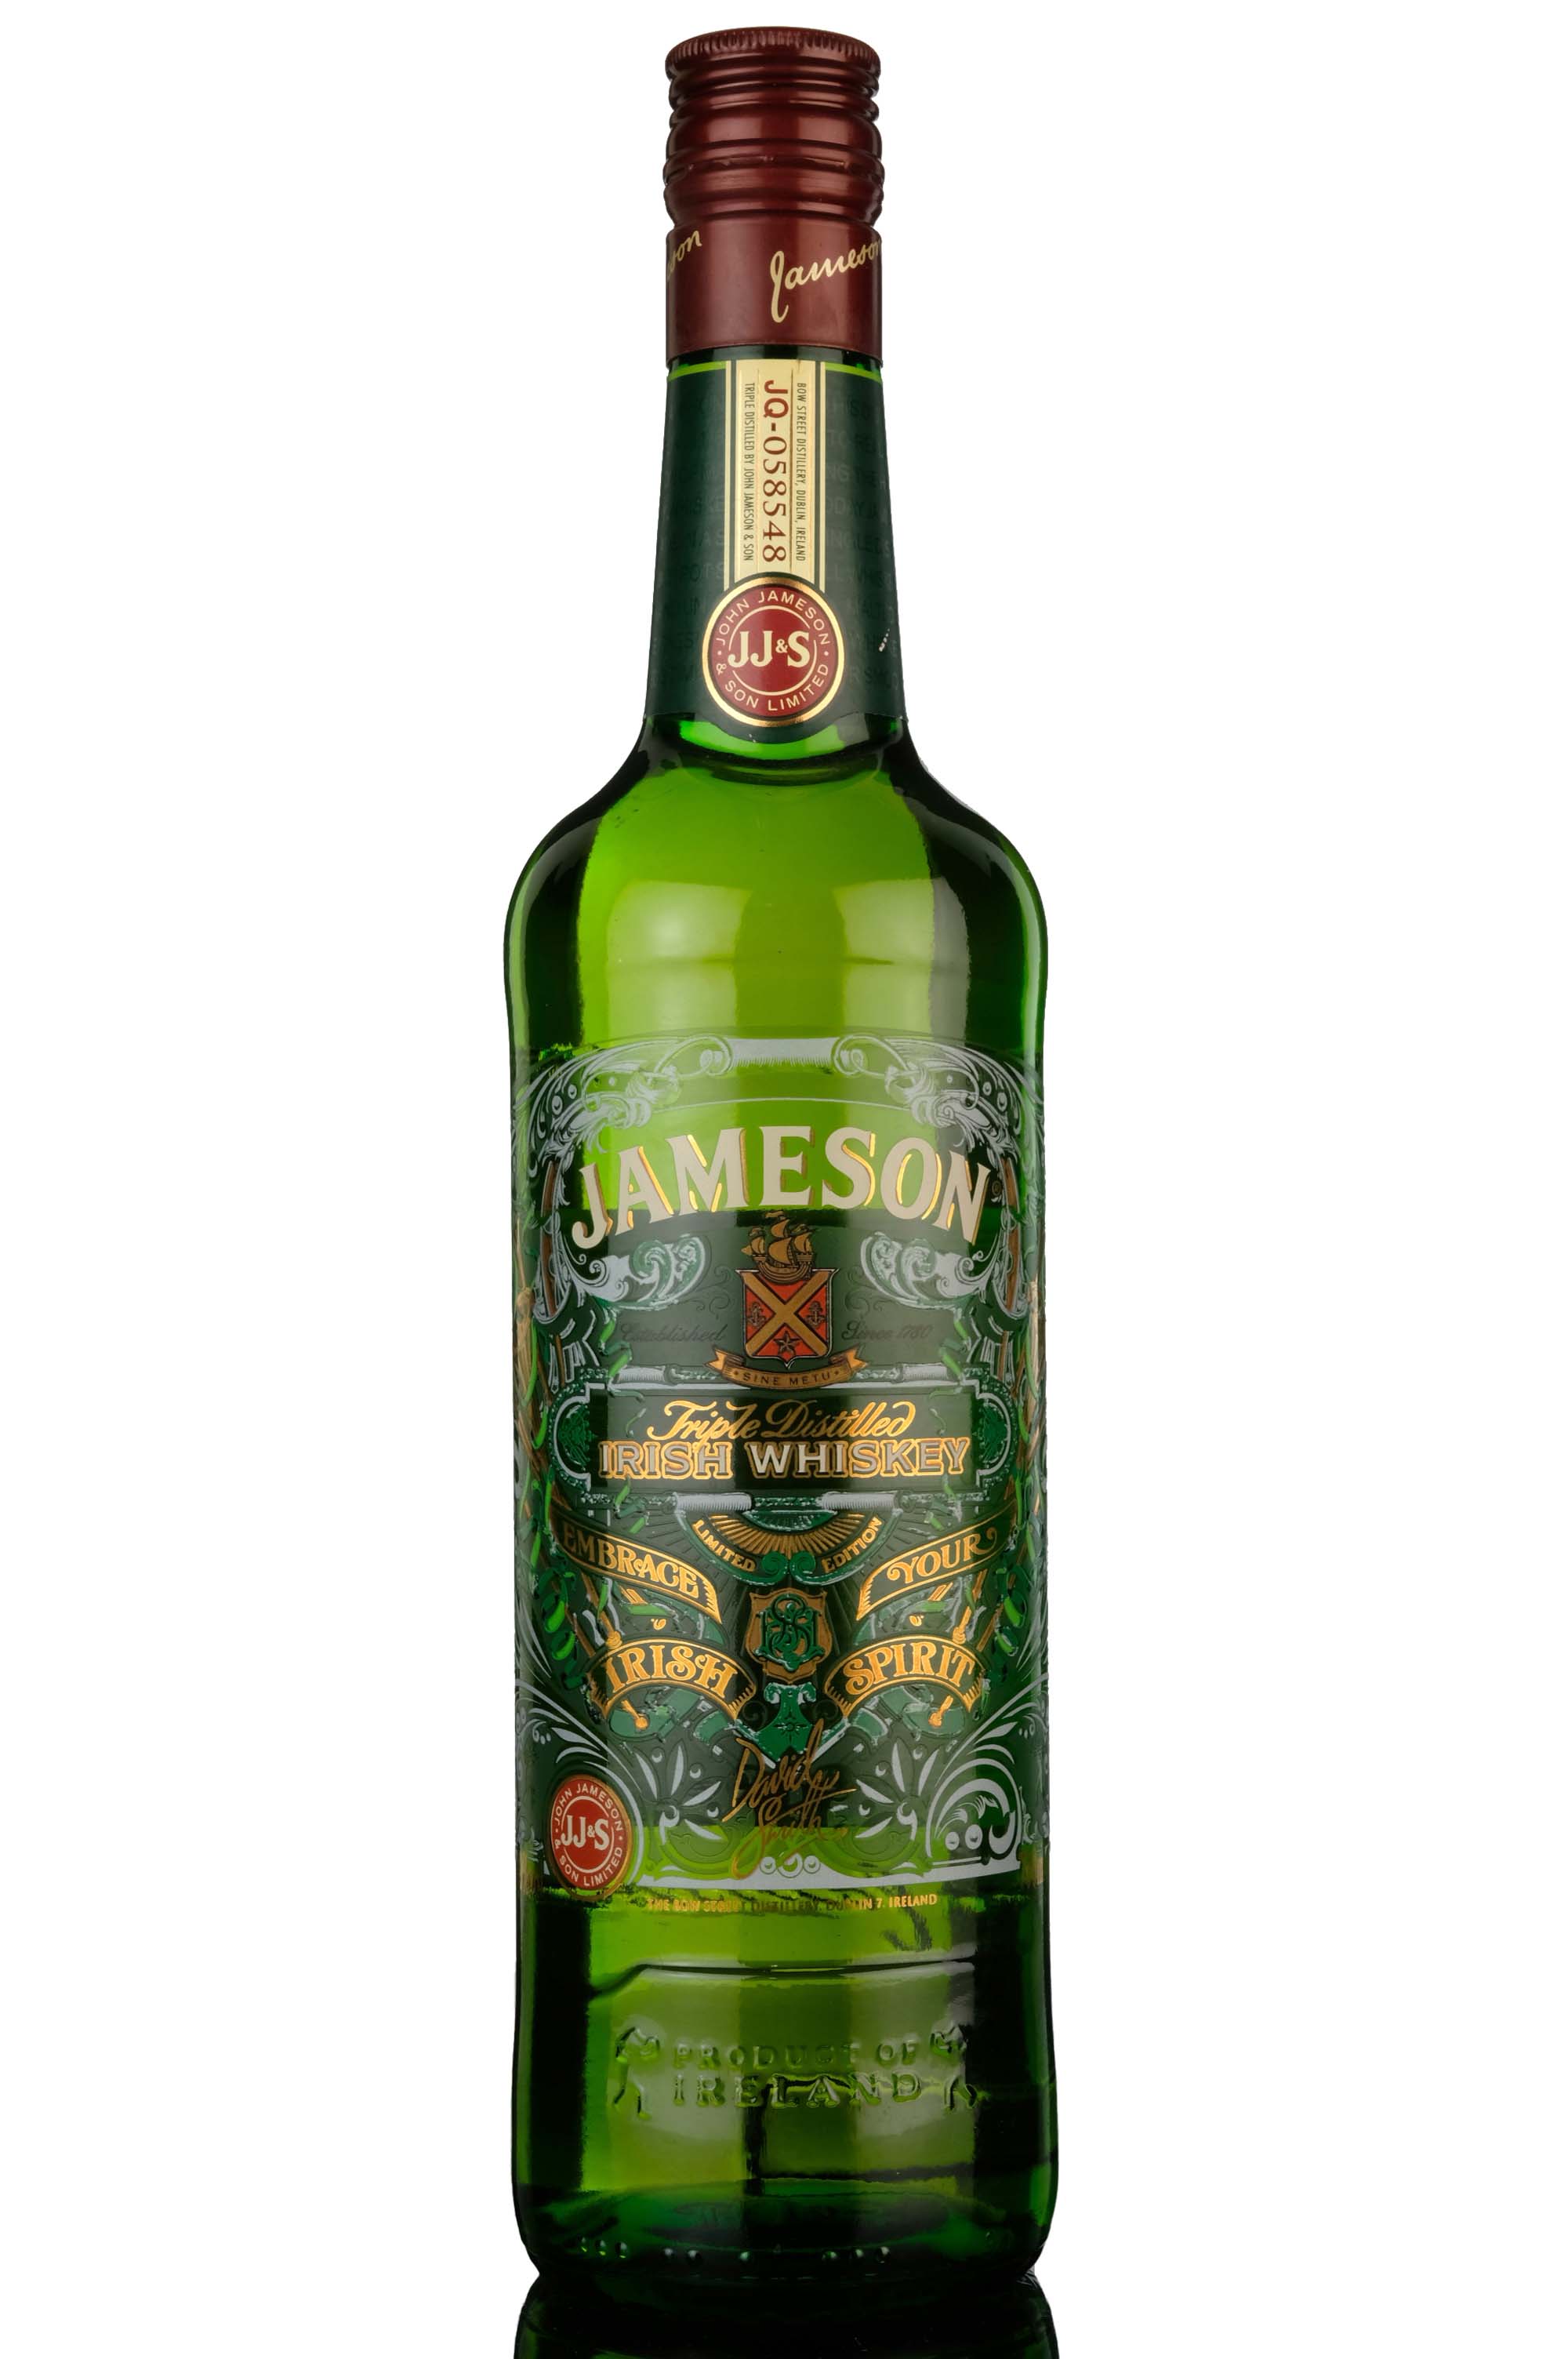 Jameson St. Patricks Day - 2013 Release